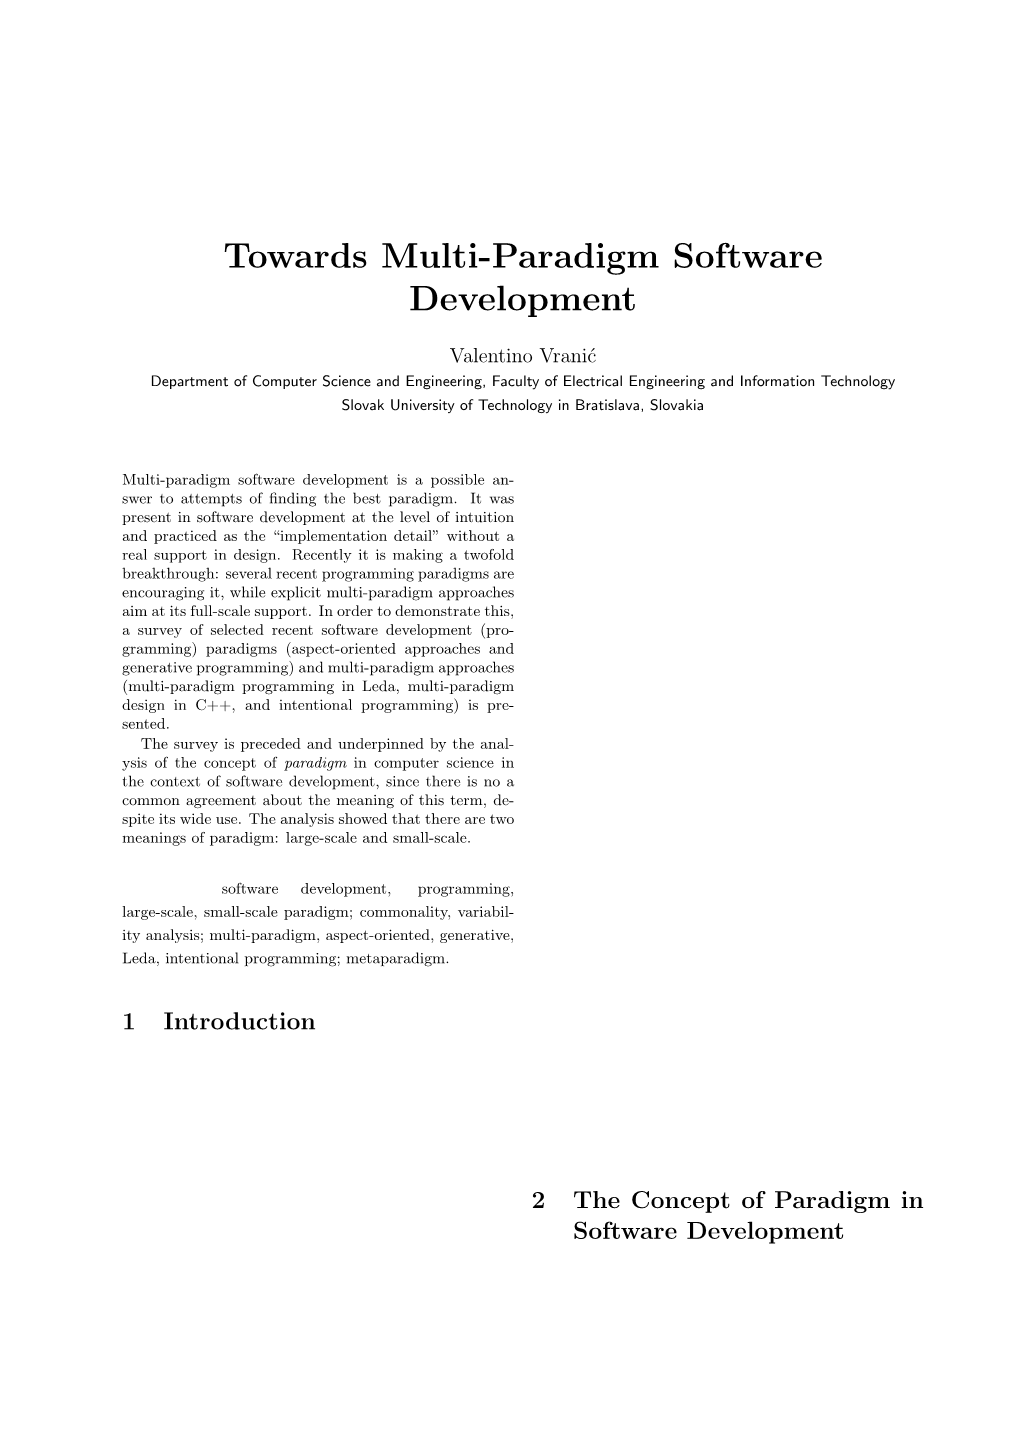 Towards Multi-Paradigm Software Development